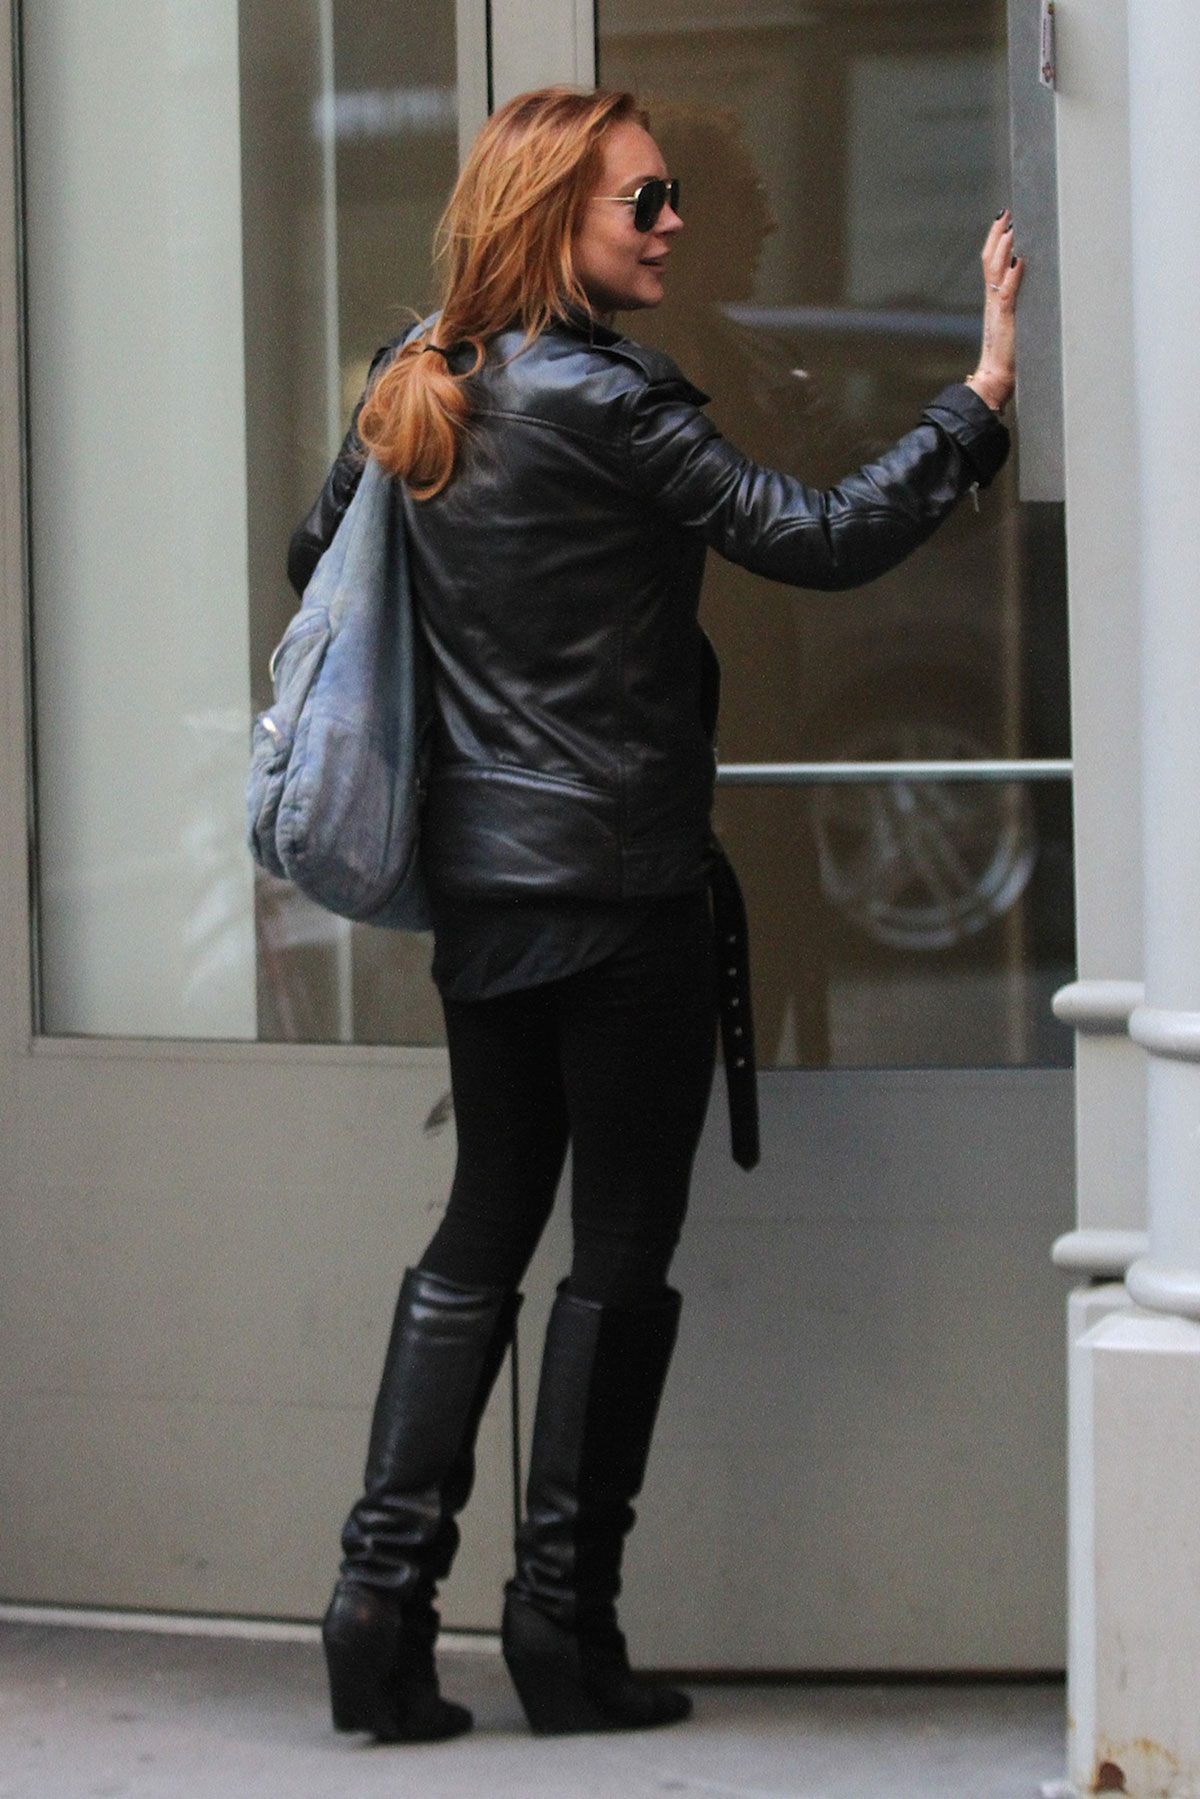 Lindsay Lohan strolled through SoHo